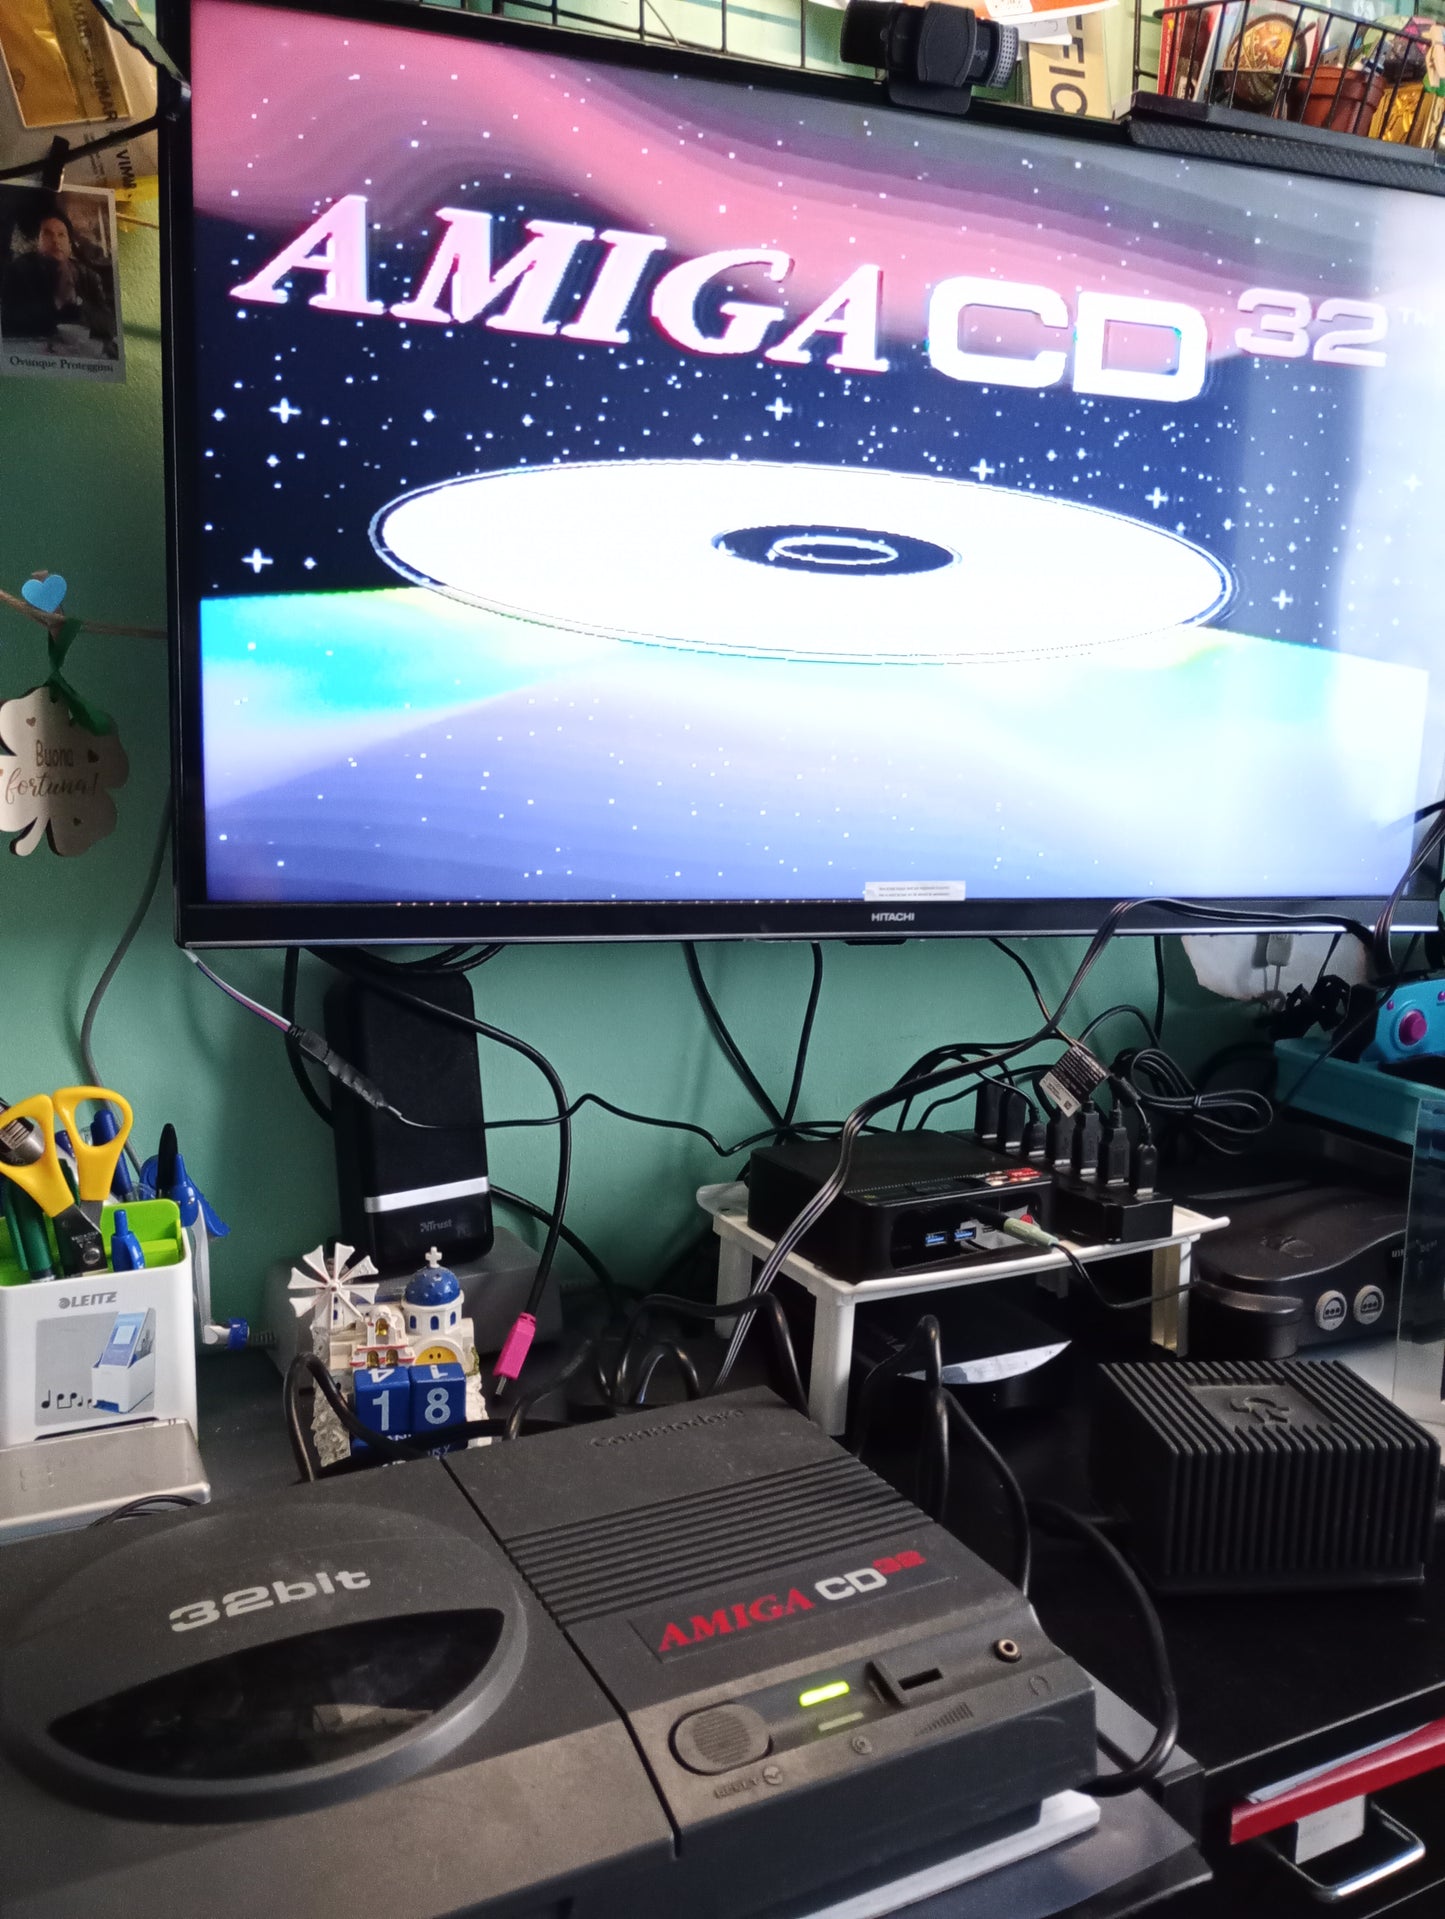 Amiga CD 32